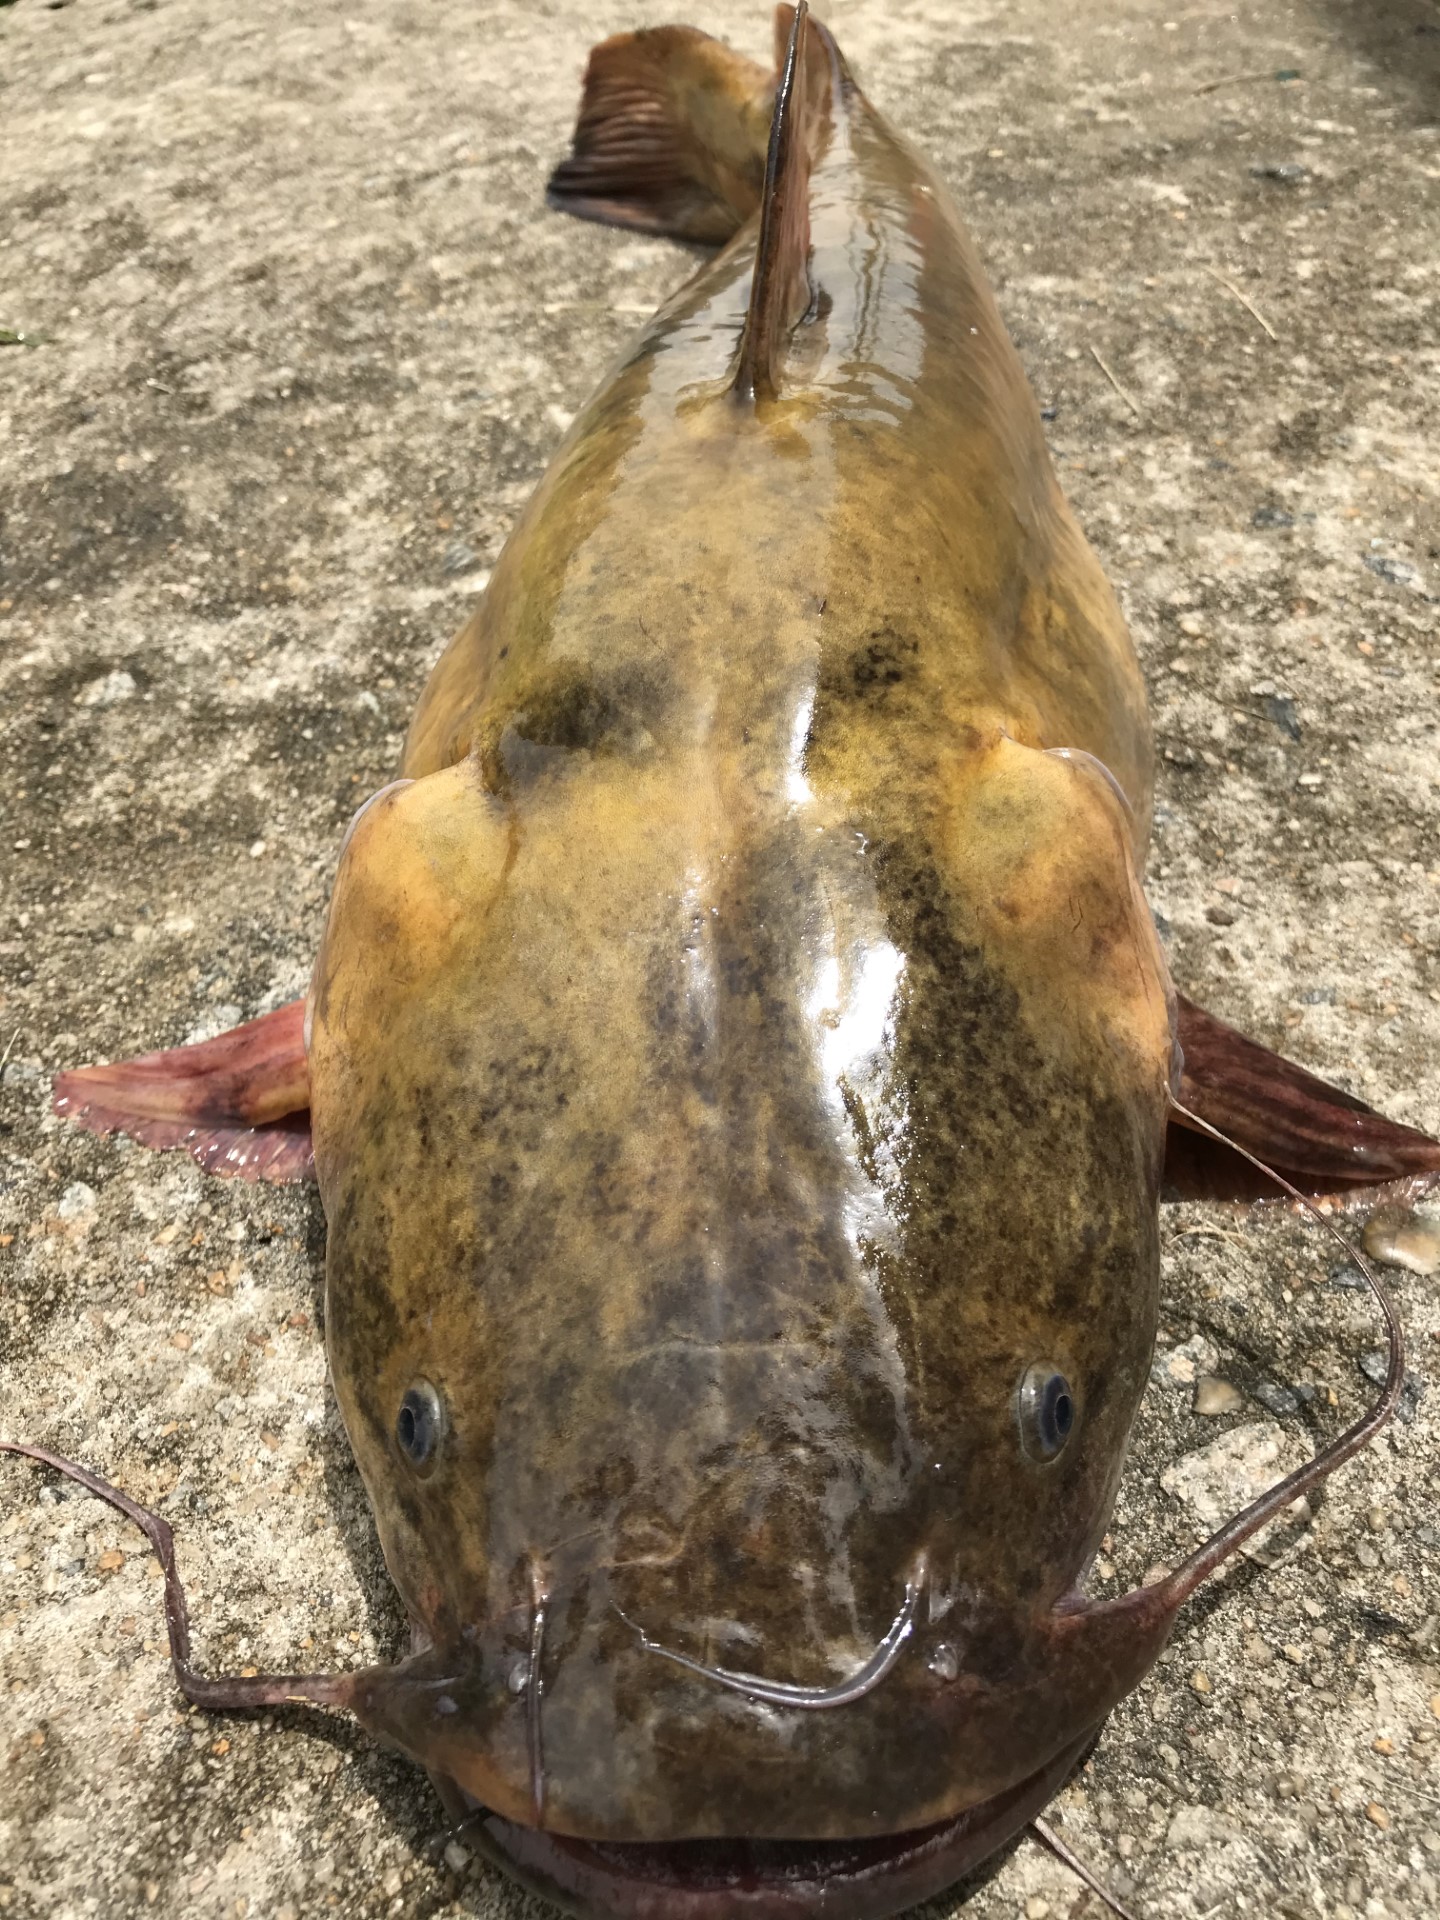 Non-native flathead catfish captured in Ogeechee River